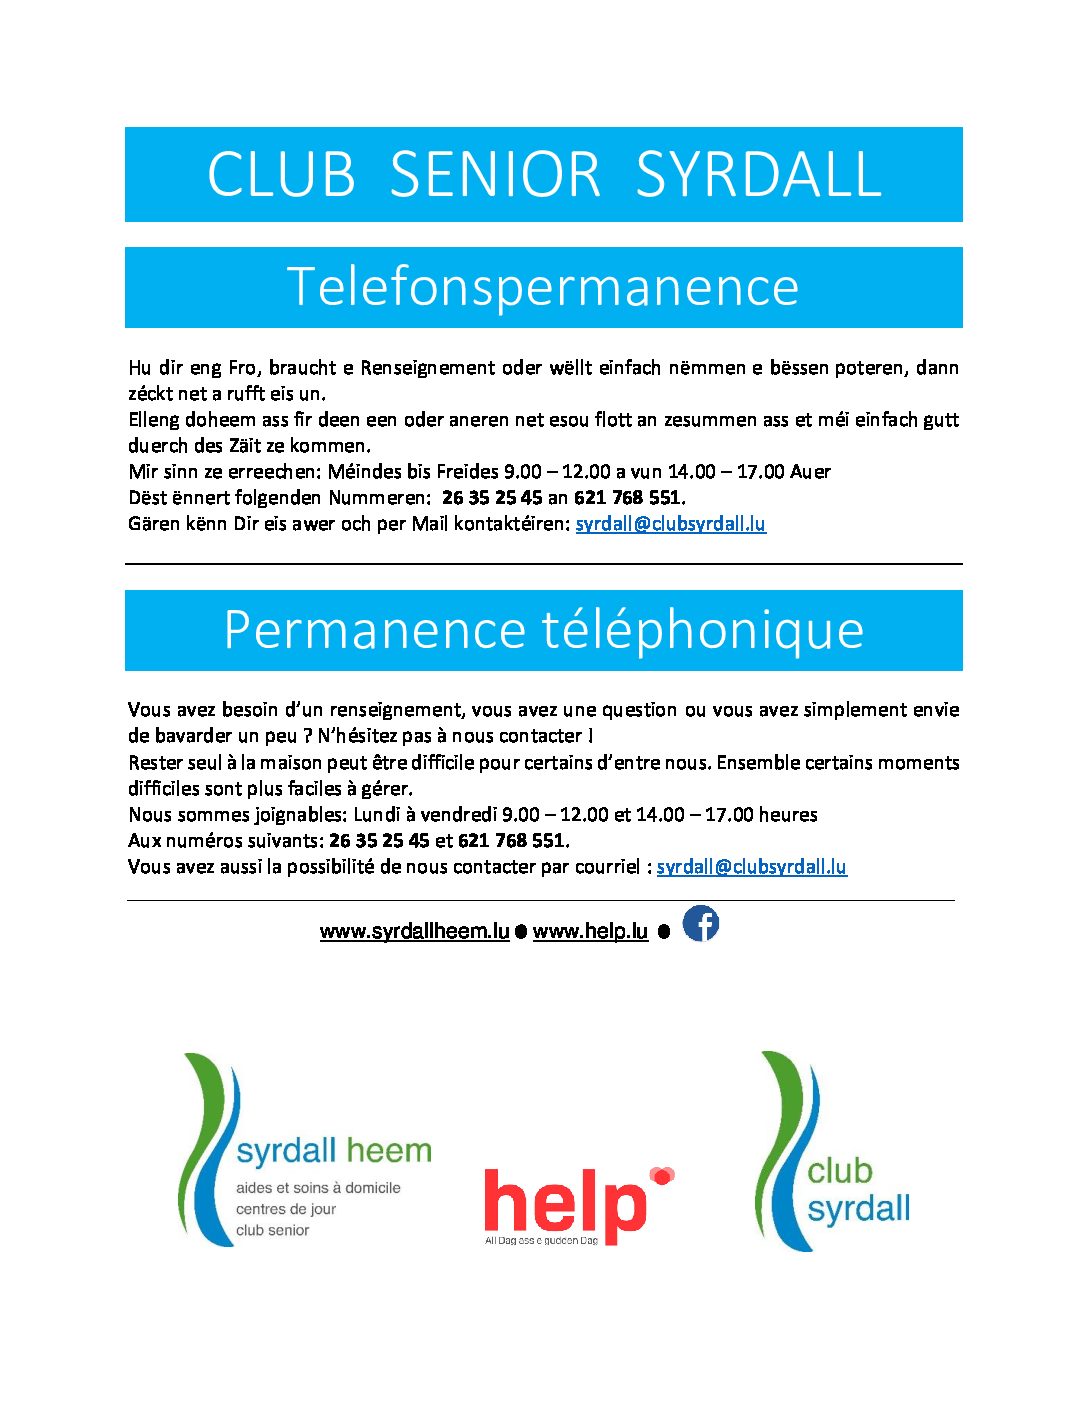 Club Senior Syrdall - Telefonspermanence